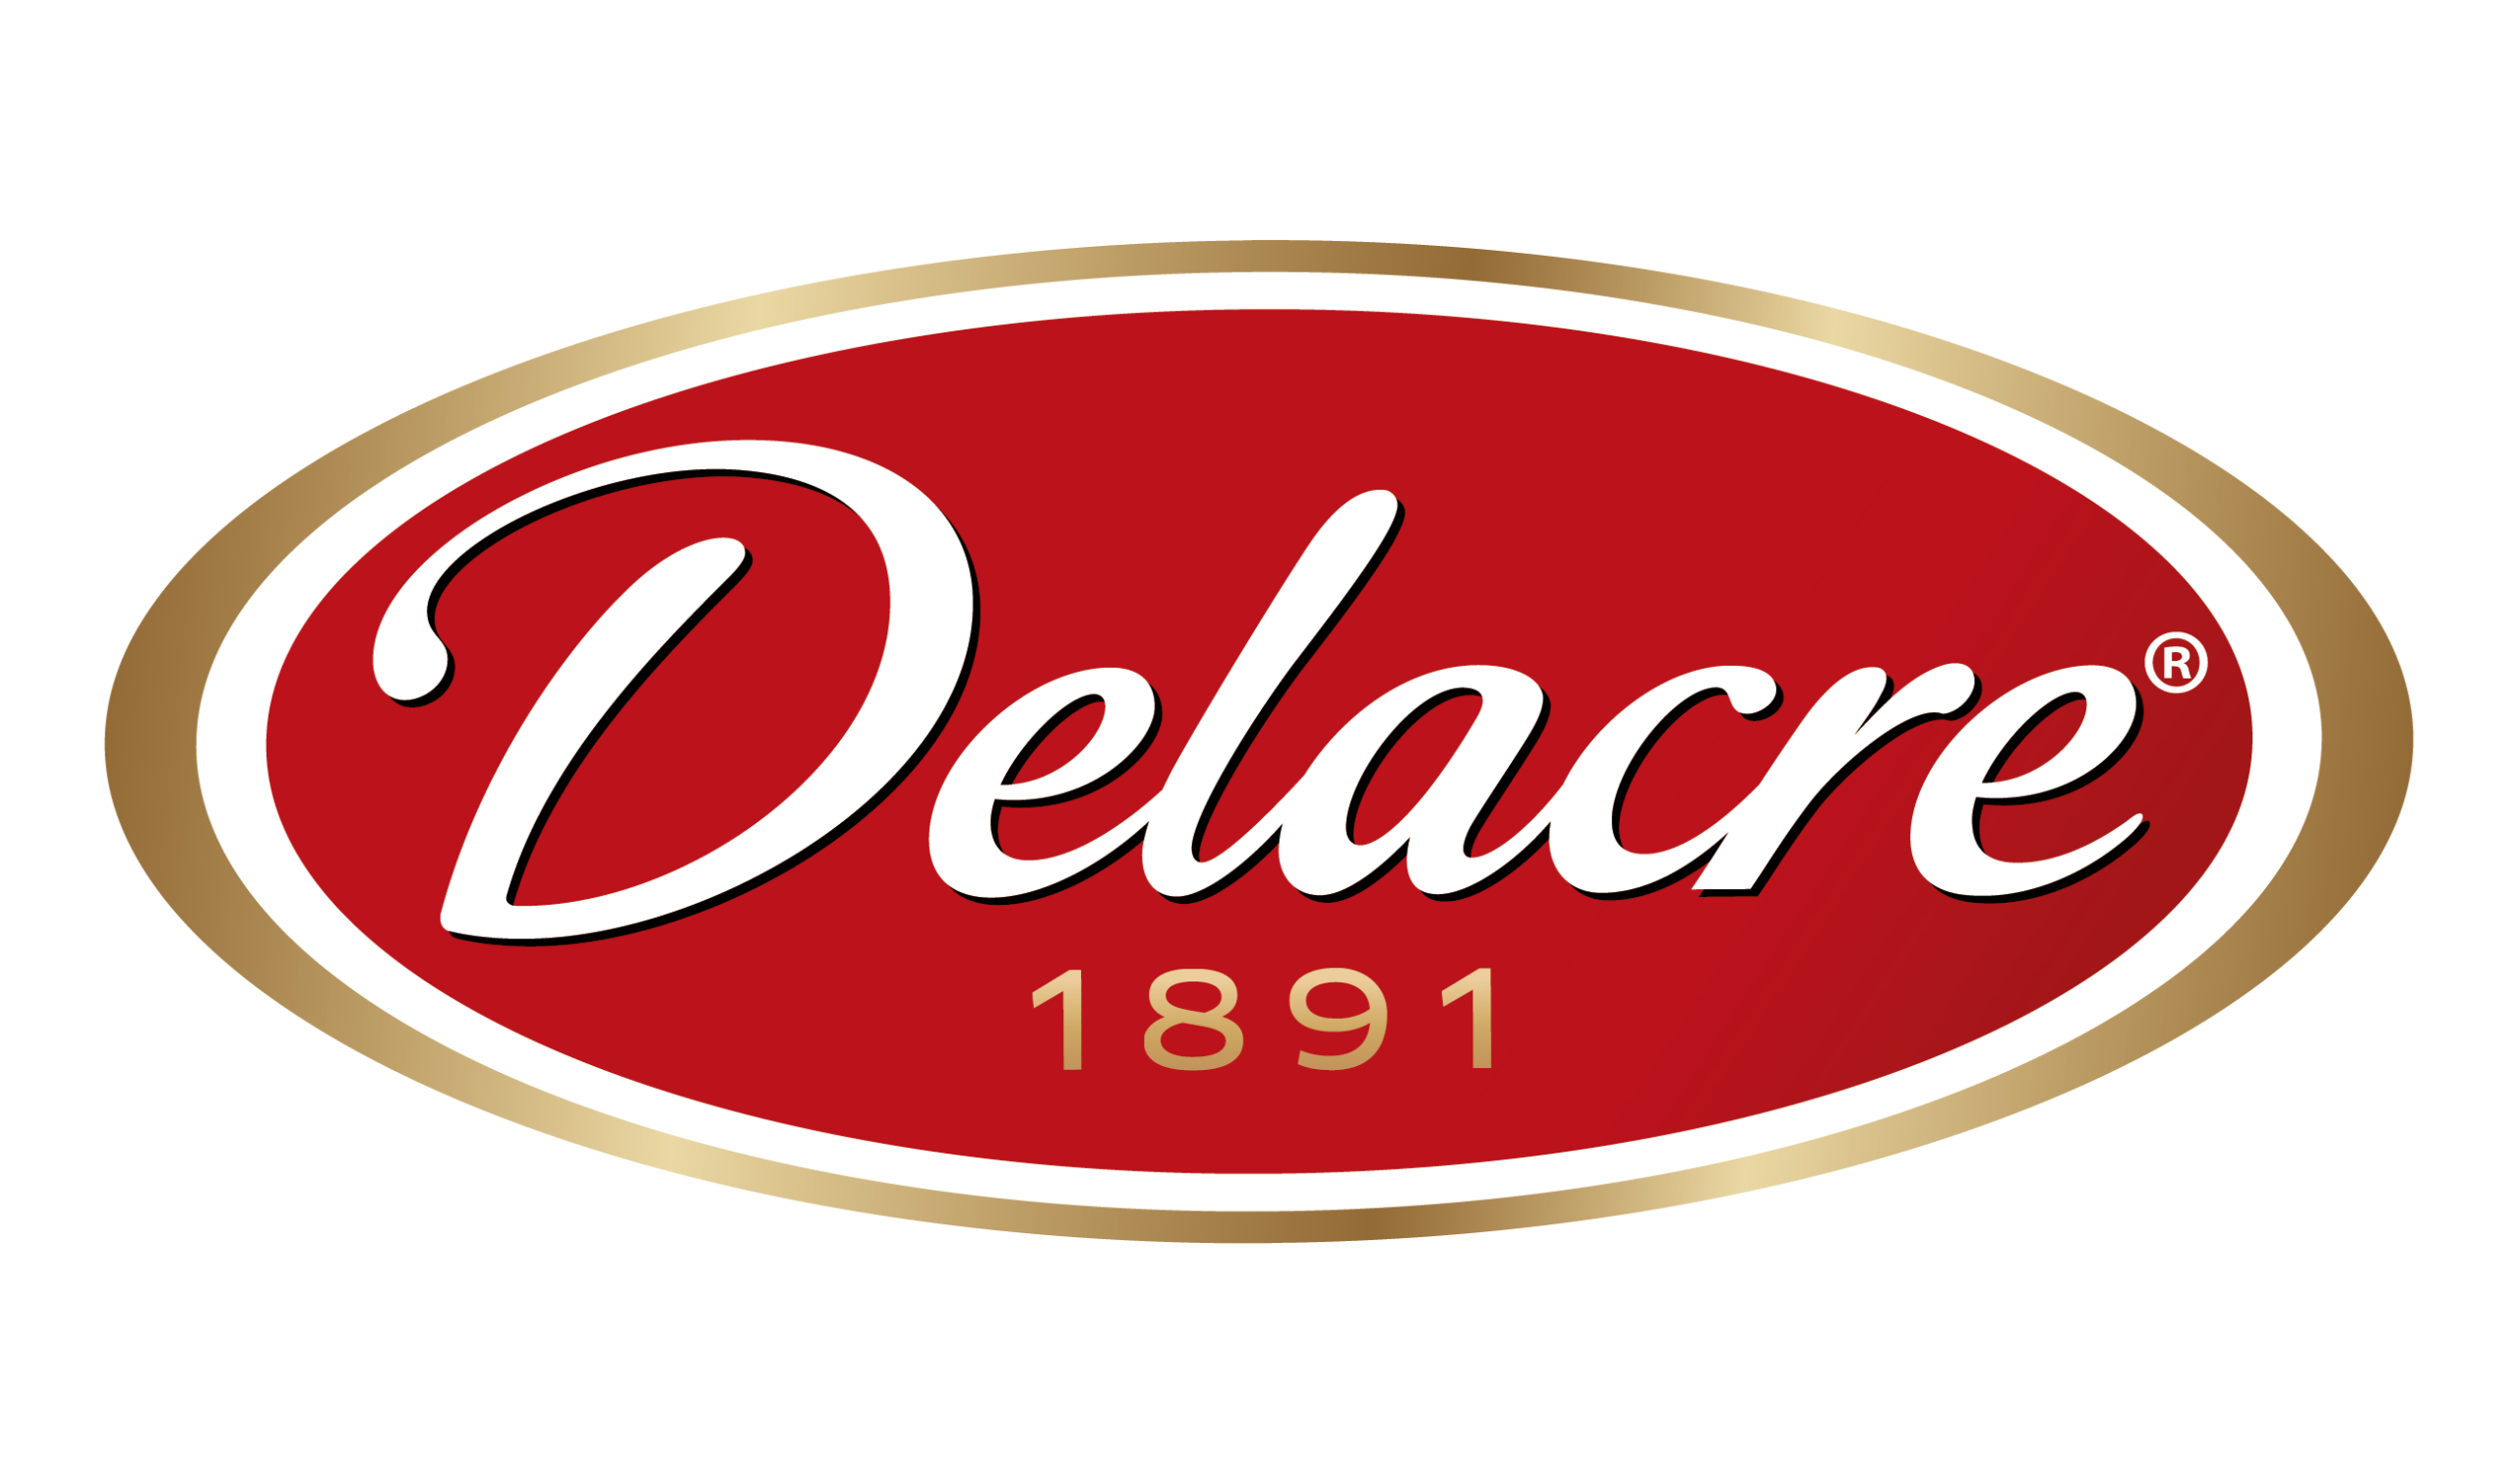 Delacre